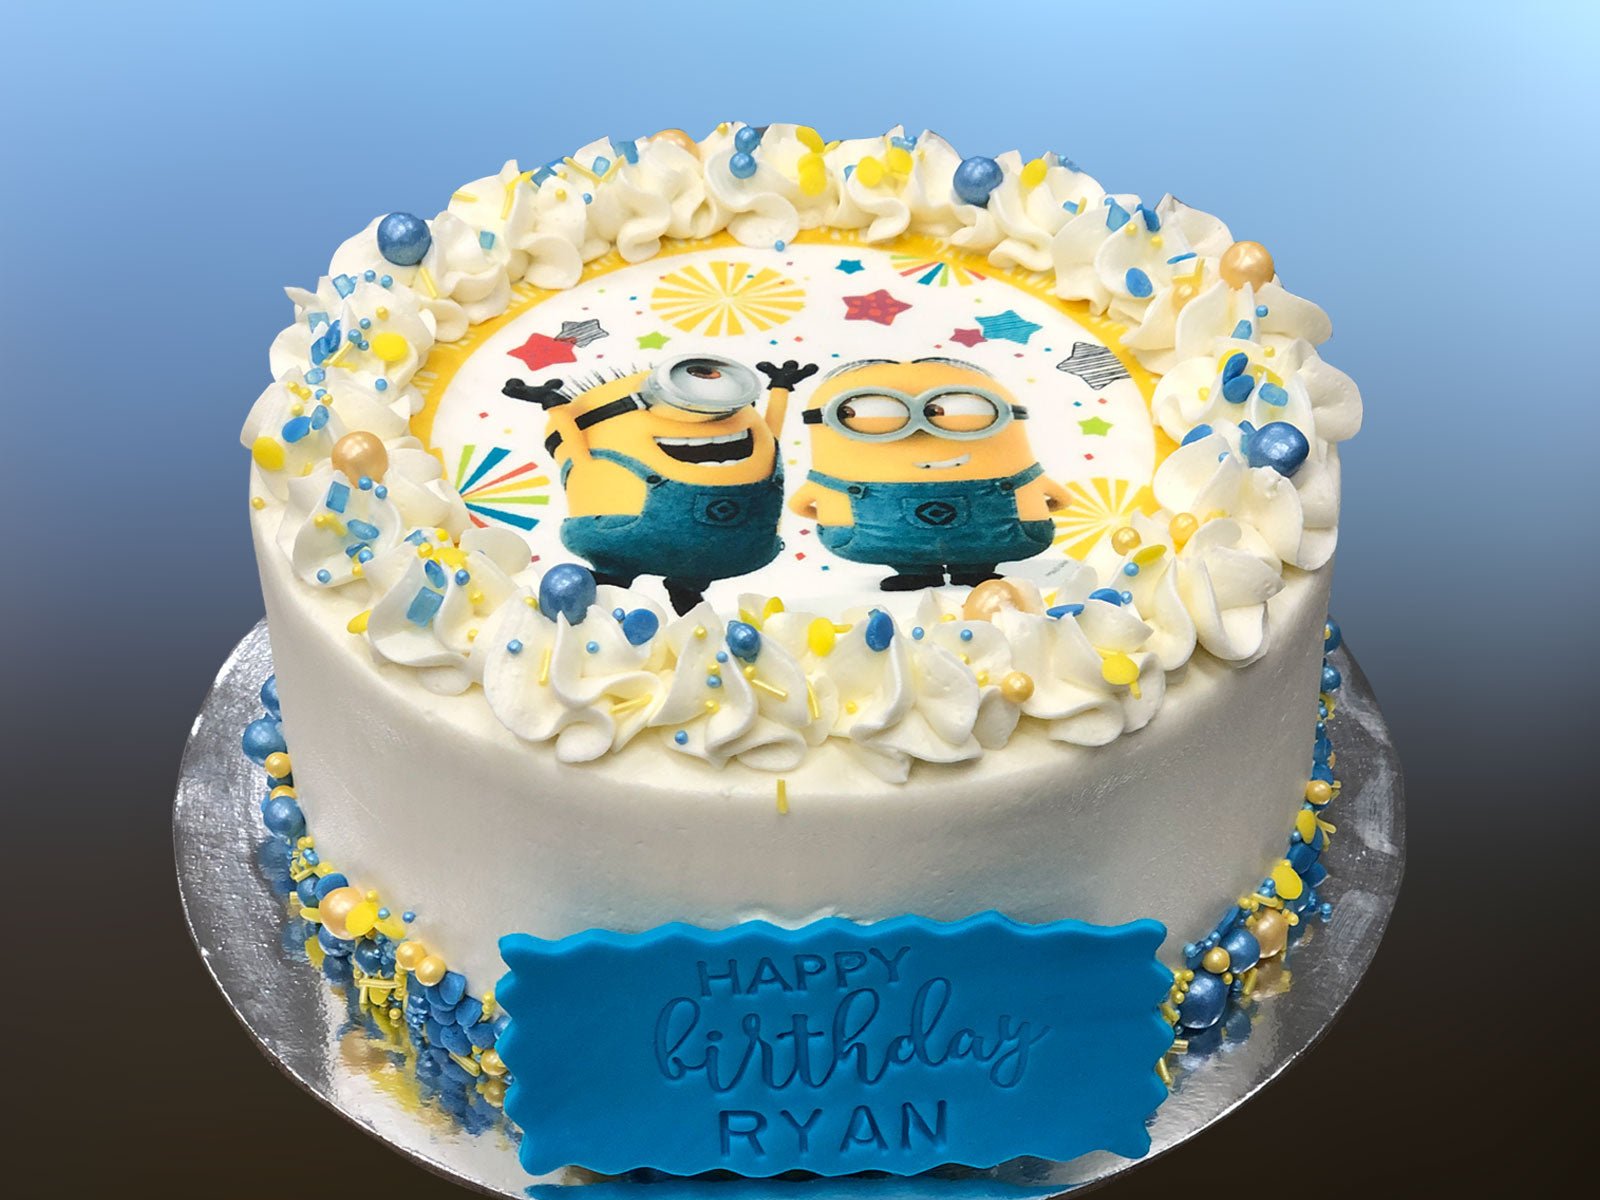 Minion cake - Decorated Cake by Sunny Dream - CakesDecor